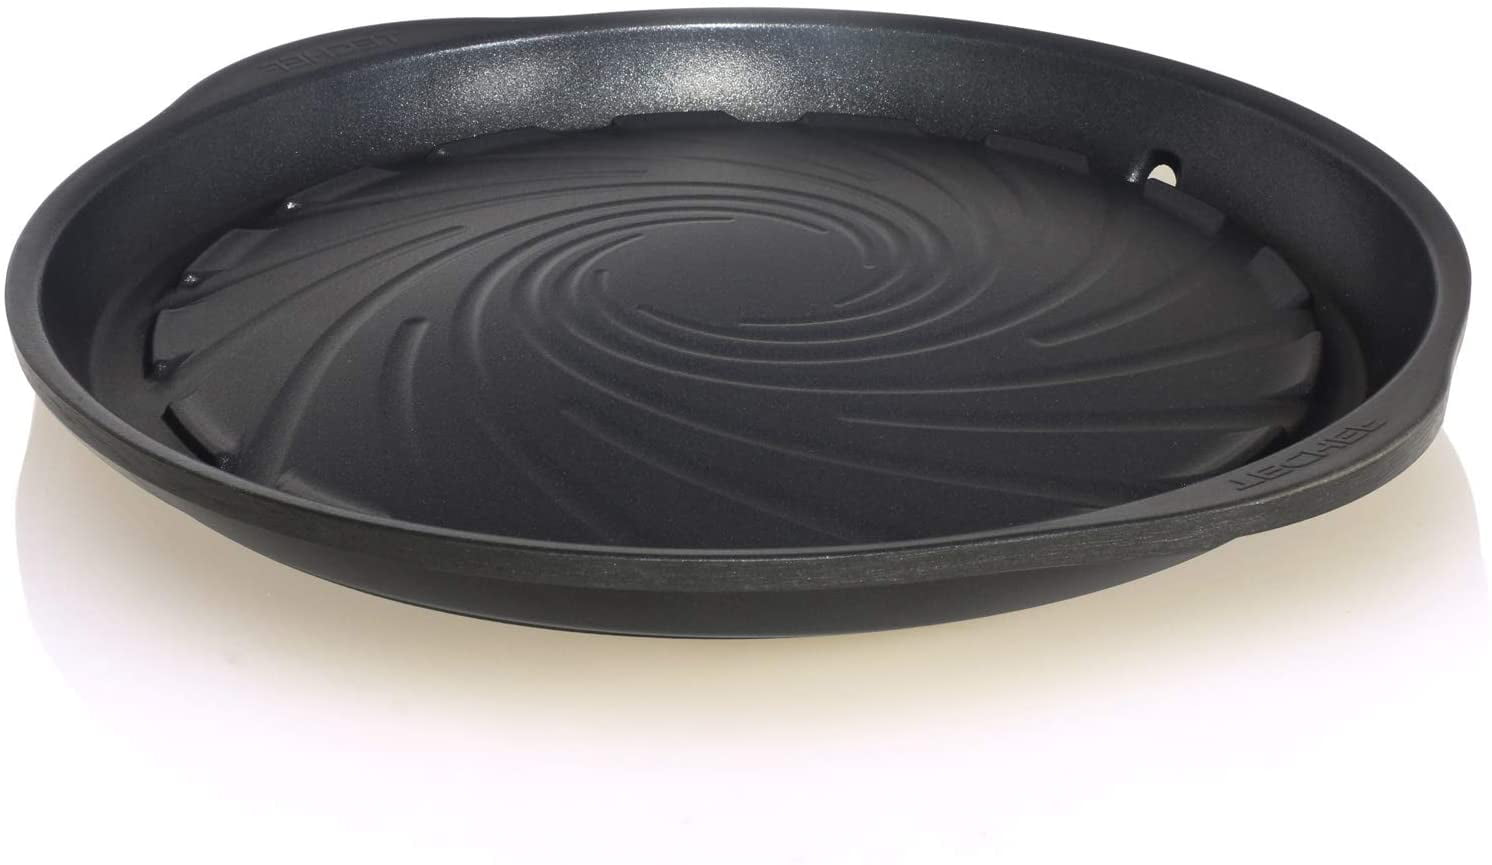 TeChef Stovetop Korean BBQ Non-Stick Grill Pan with New Safe Teflon Select Non-Stick Coating Black PFOA Free 